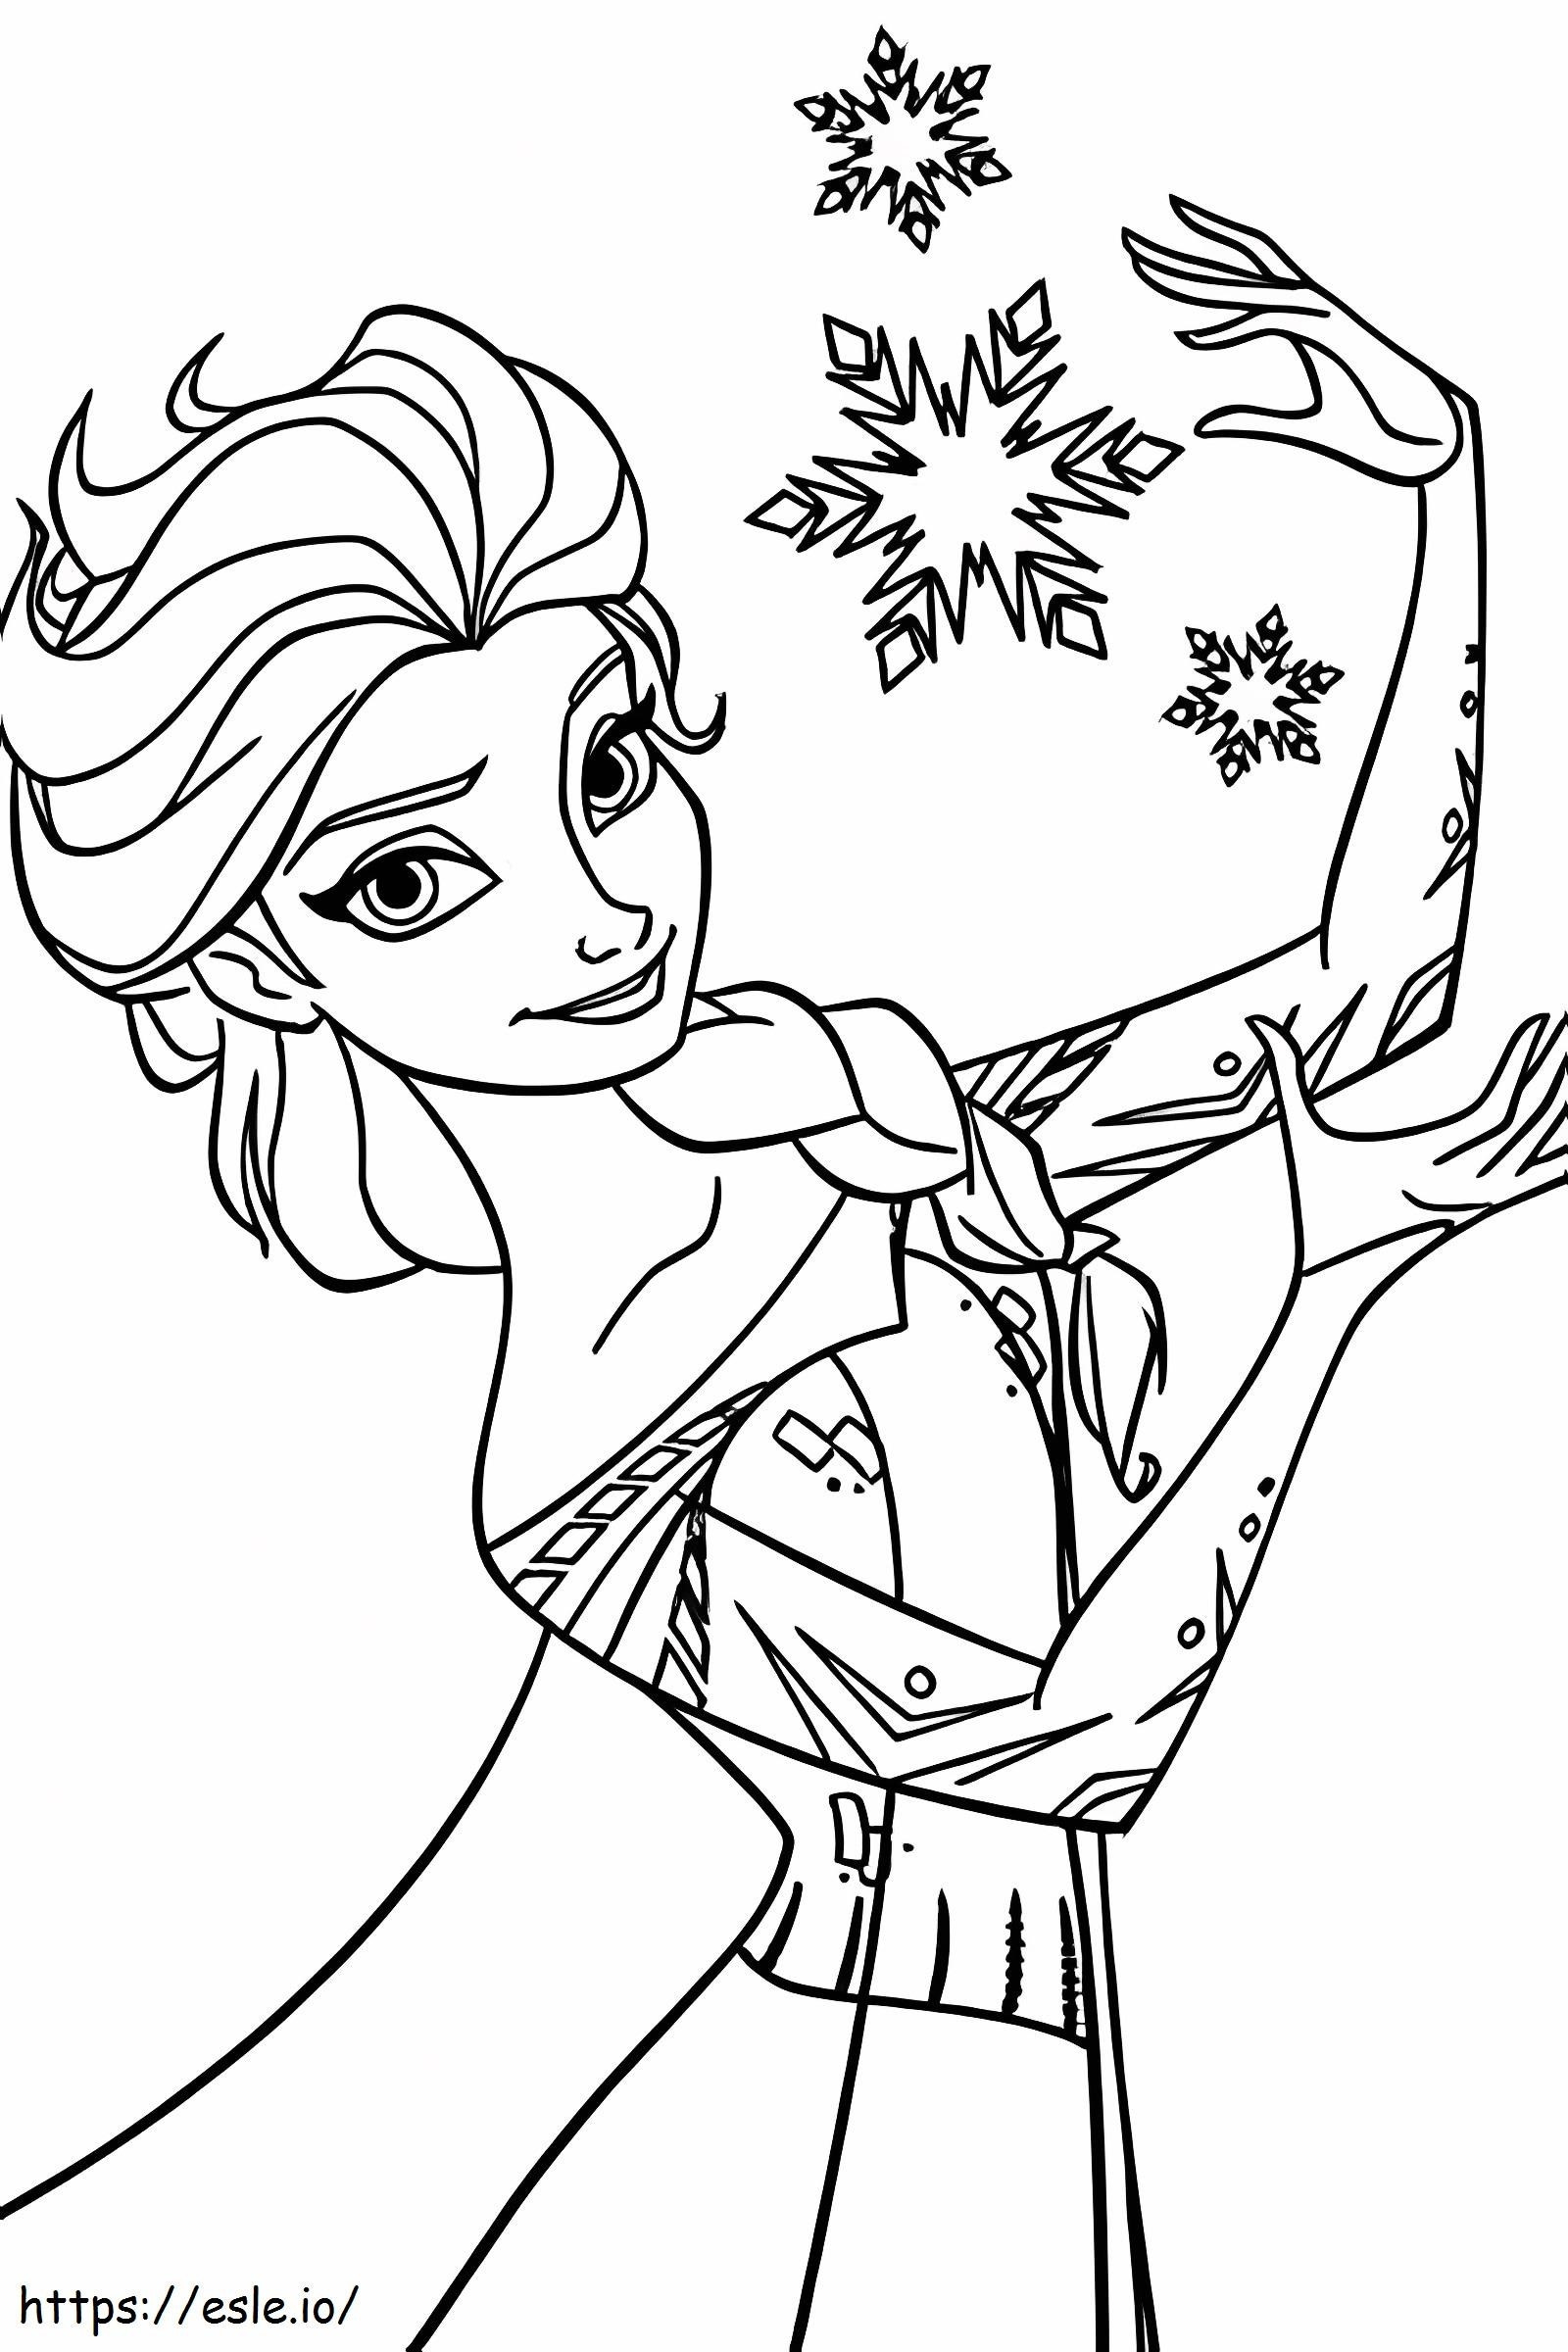 Coloriage Visage d'Elsa Disney à imprimer dessin